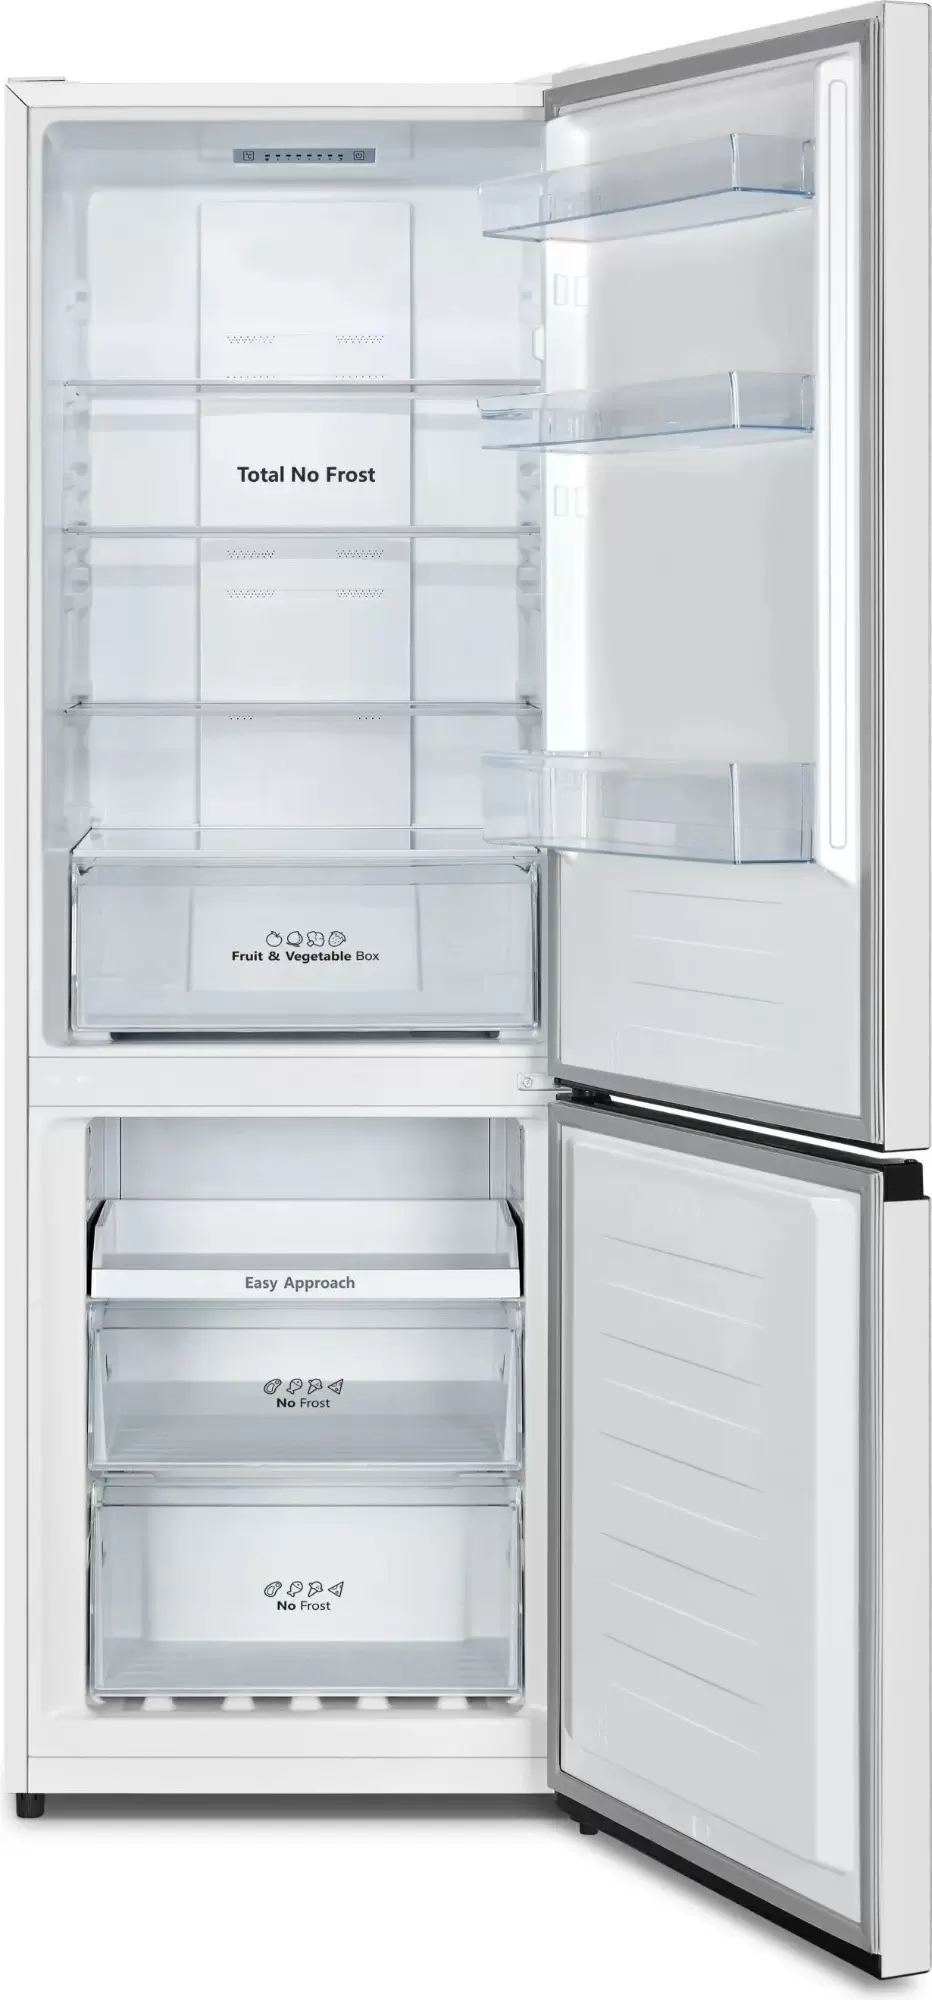 Холодильник Hisense RB372N4AW2, белый